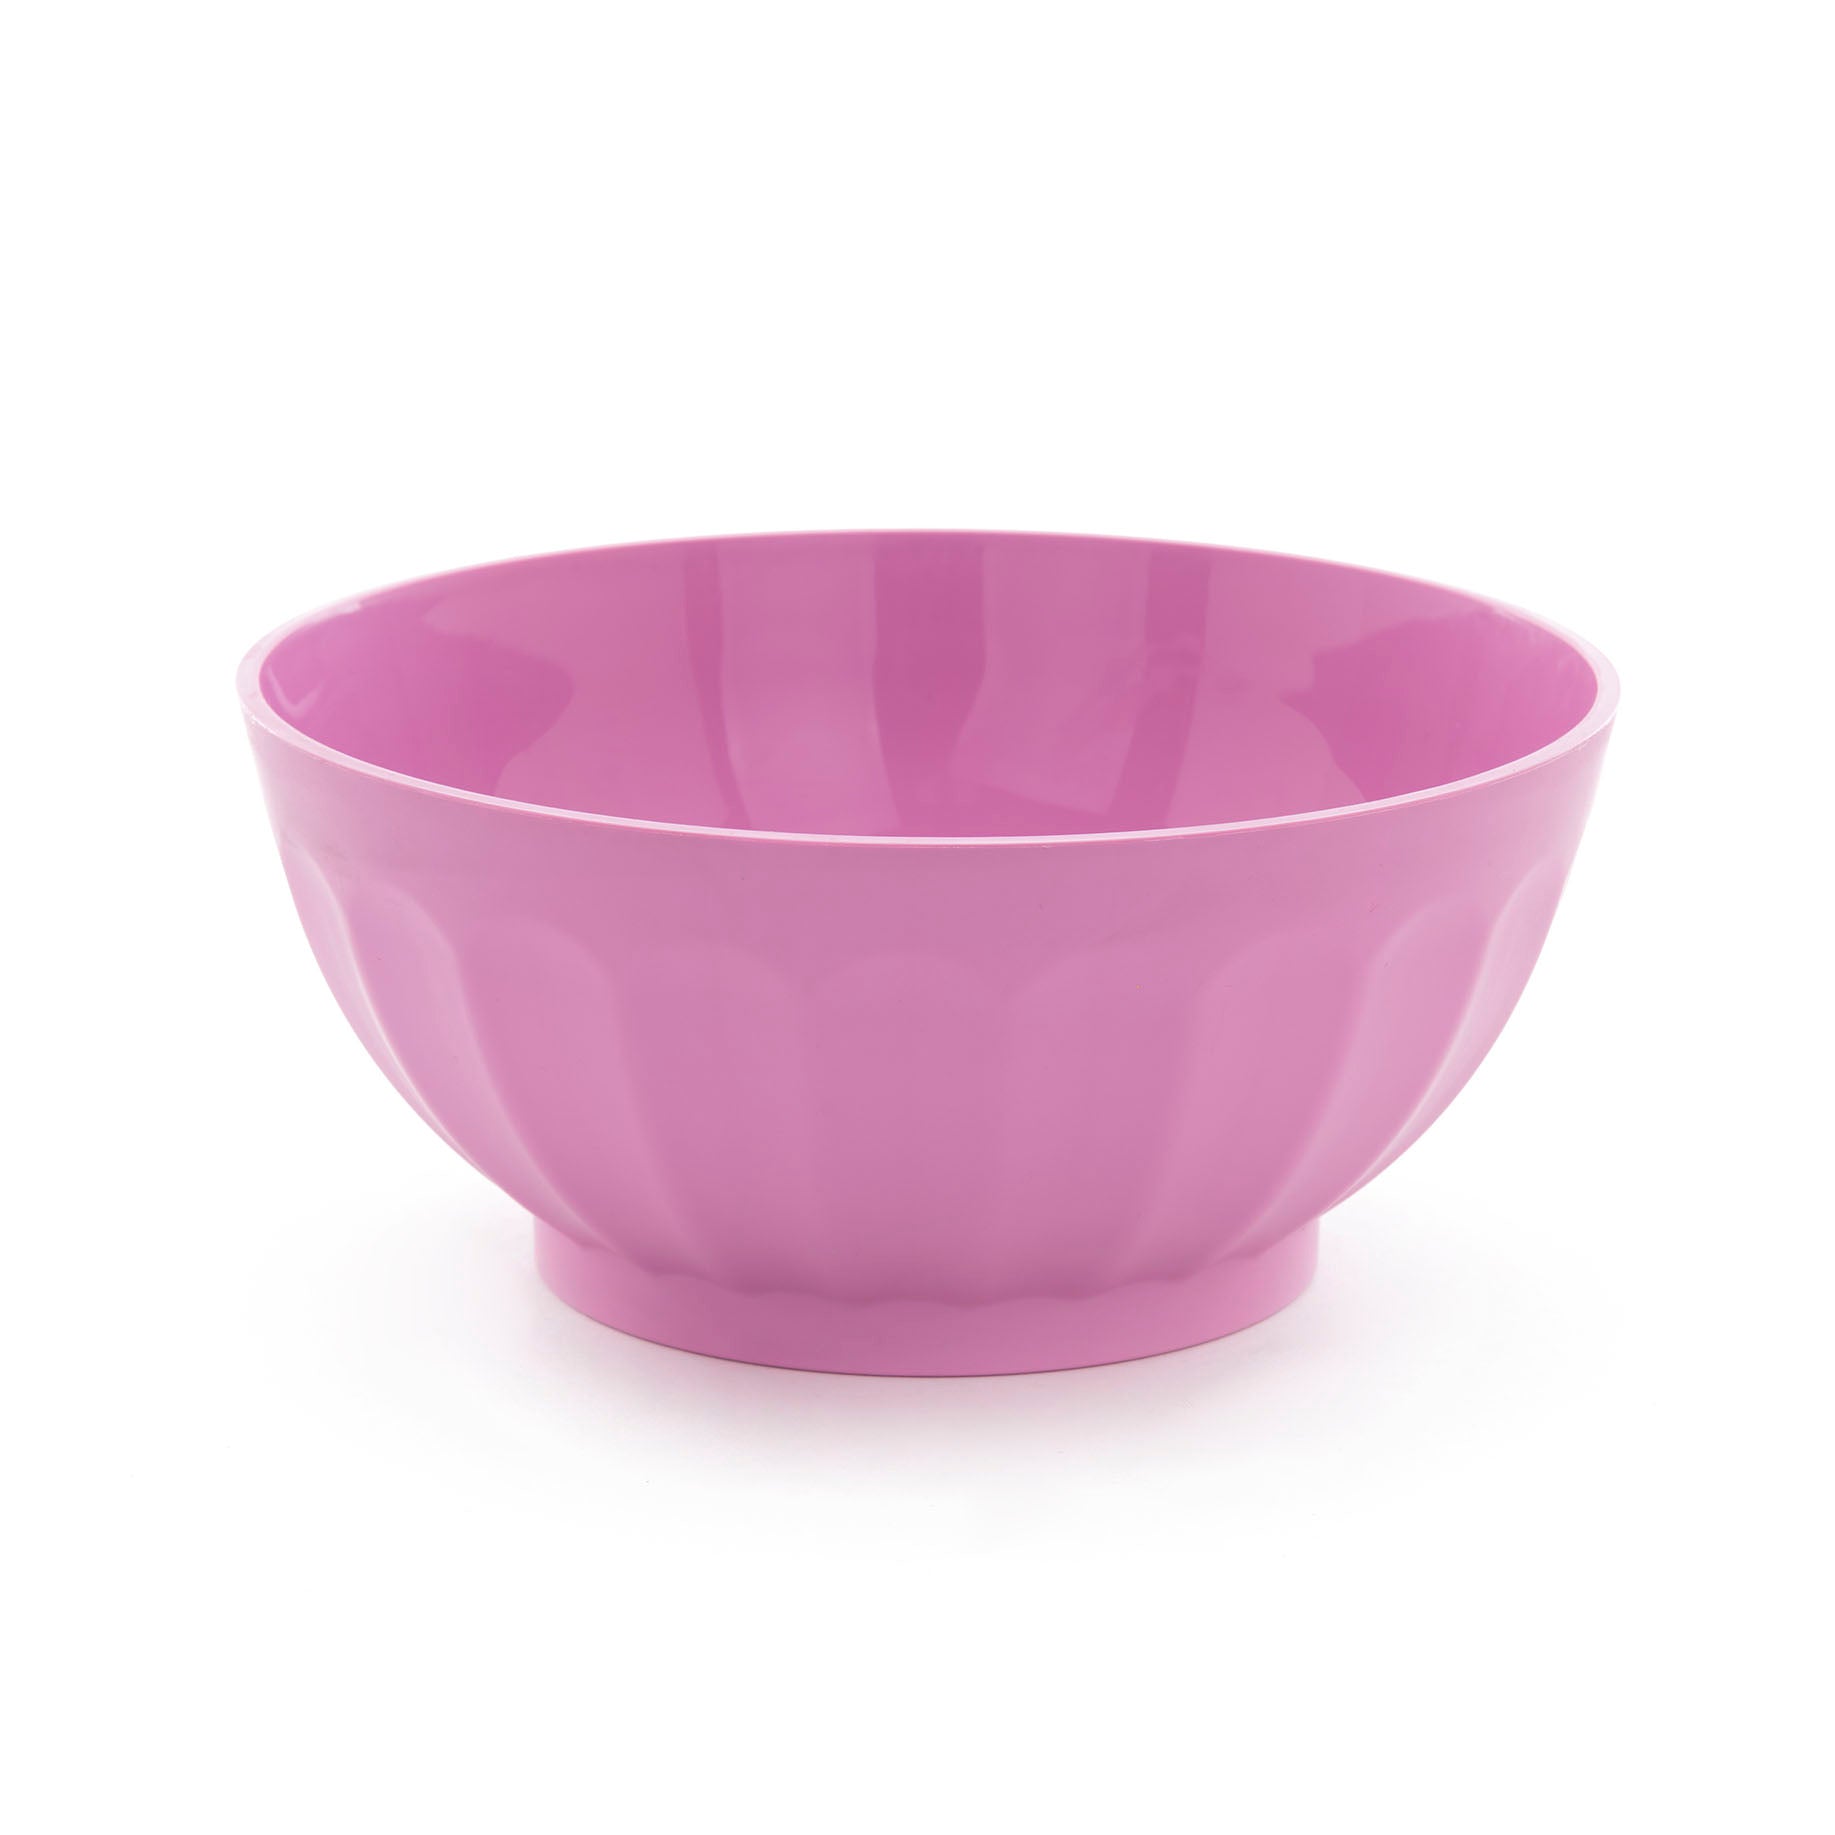 Mintra Unbreakable Plastic Bowl (04338) 4 Pack Medium 750ml Green, Size: Medium (25 oz)